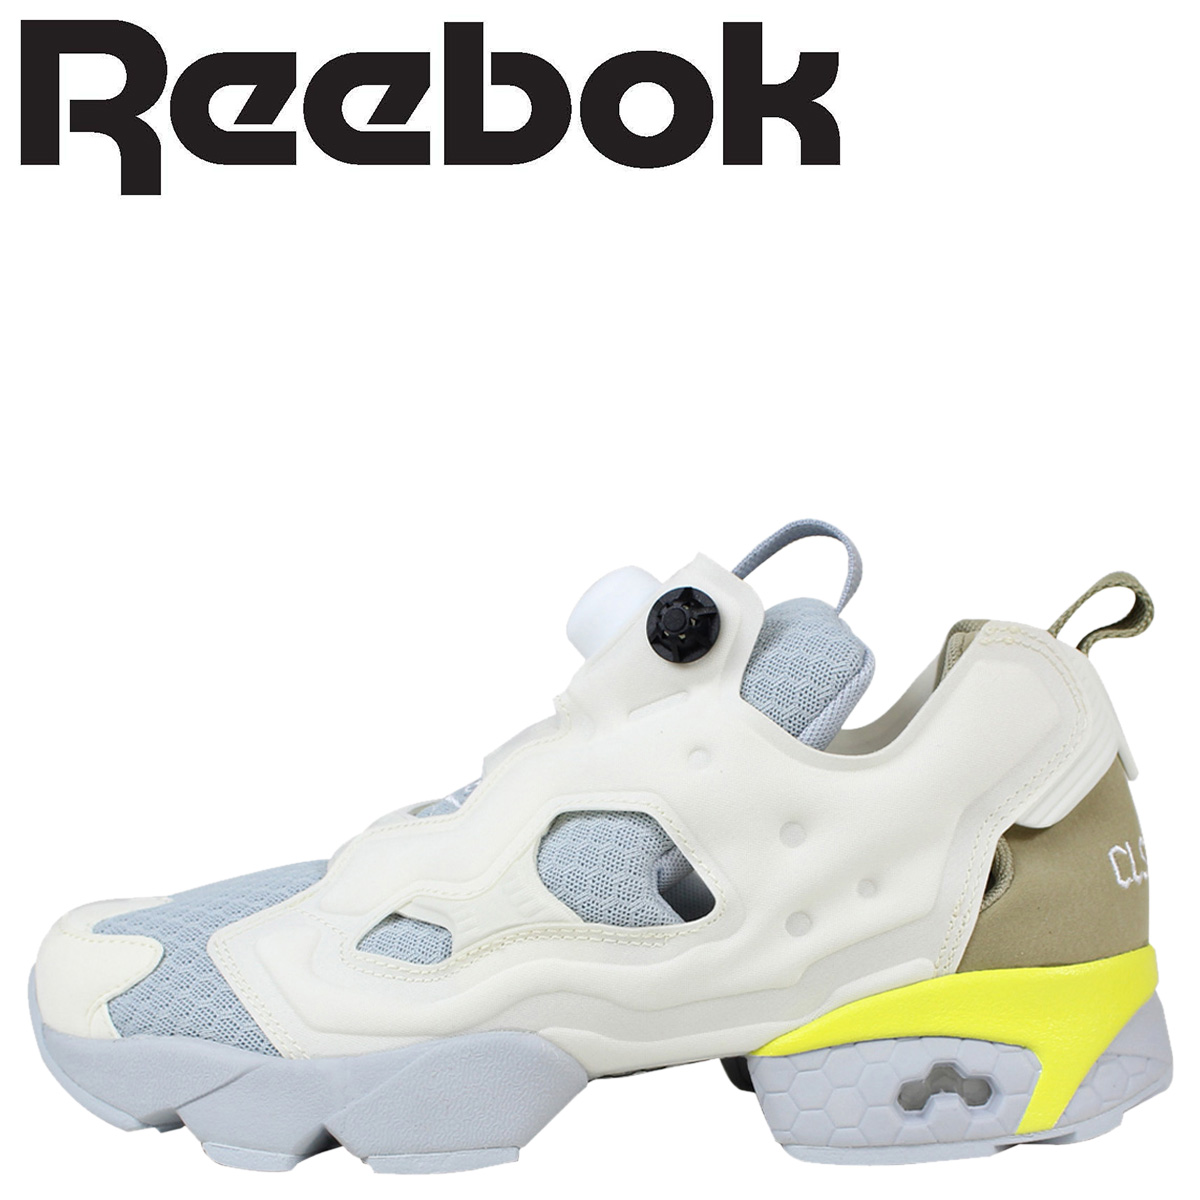 reebok pump shoes online